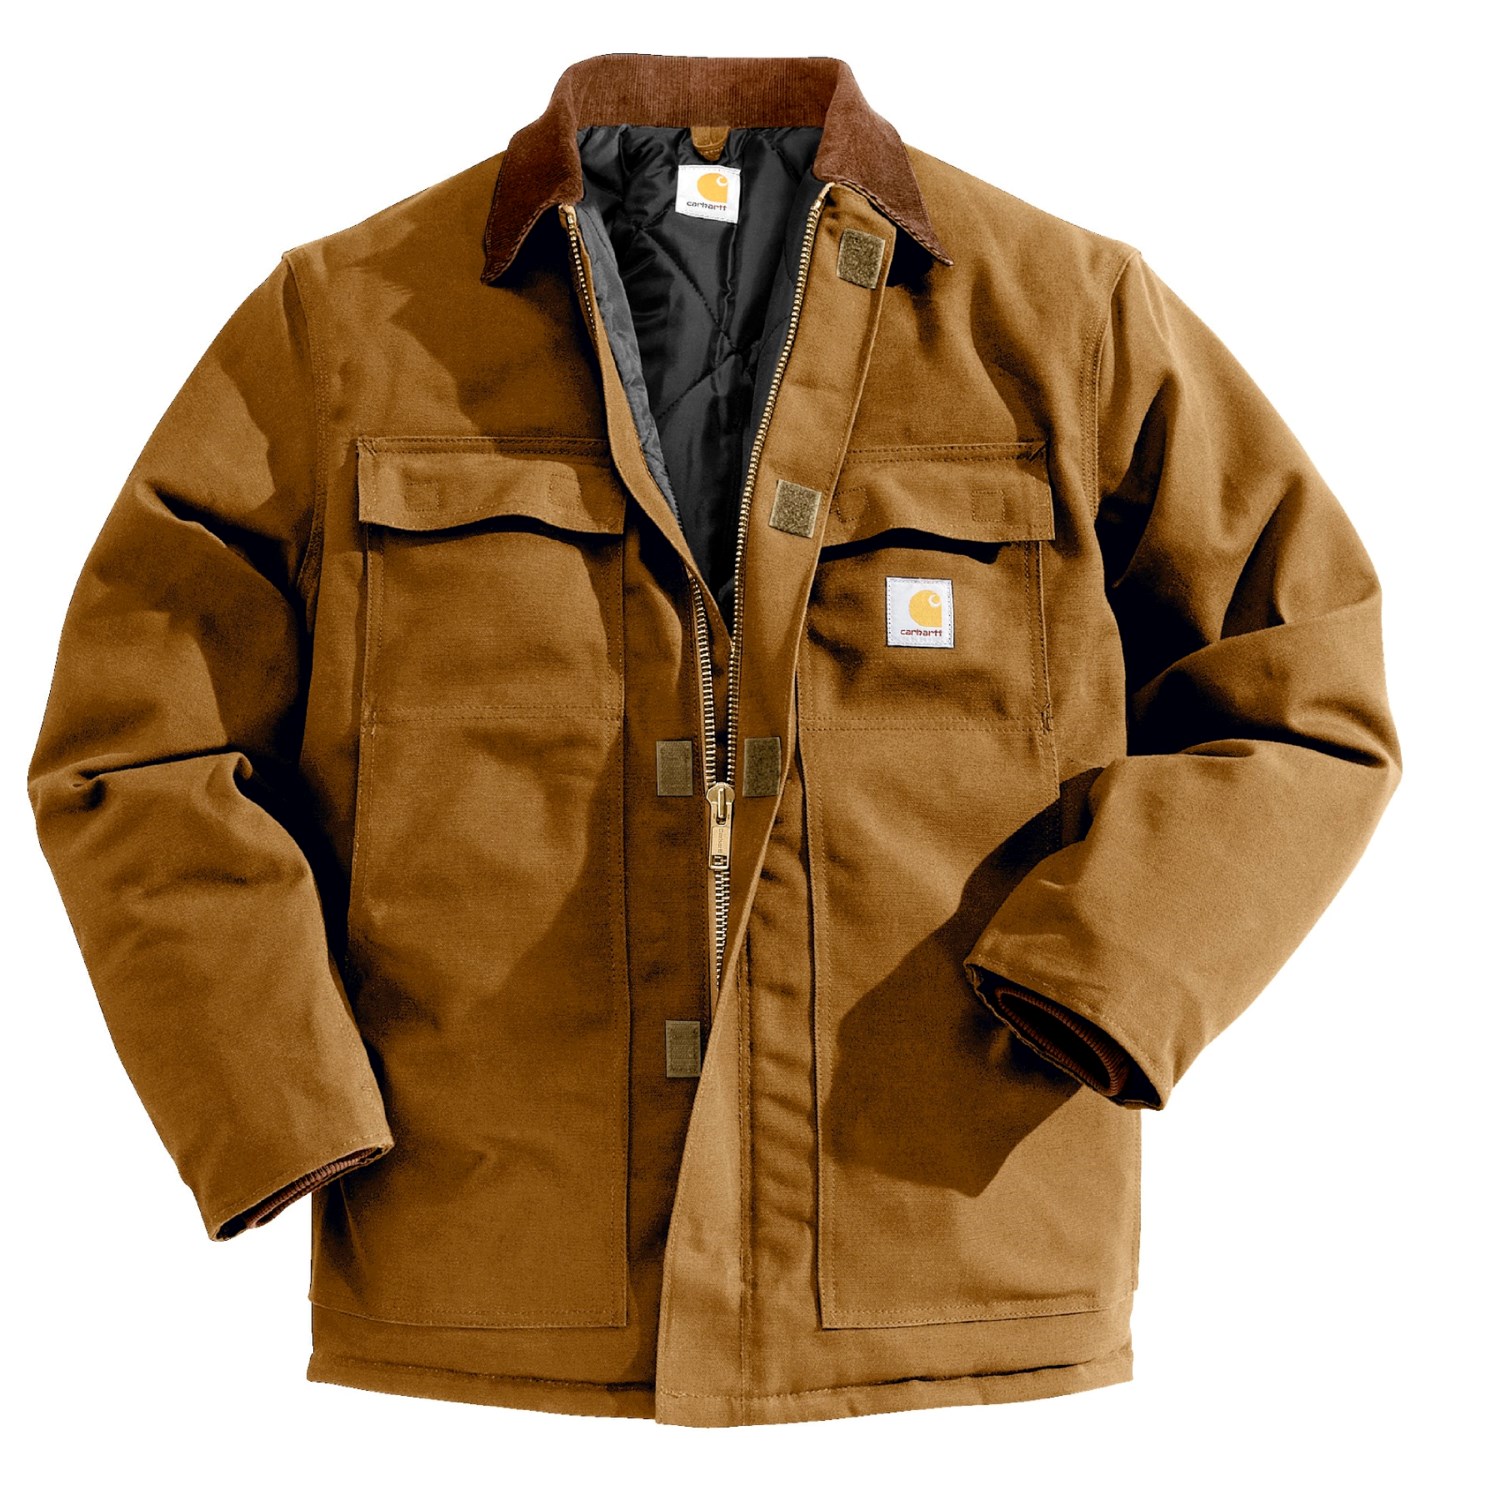 Carhartt Traditional Duck Arctic Work Jacket (For Men) 2191M